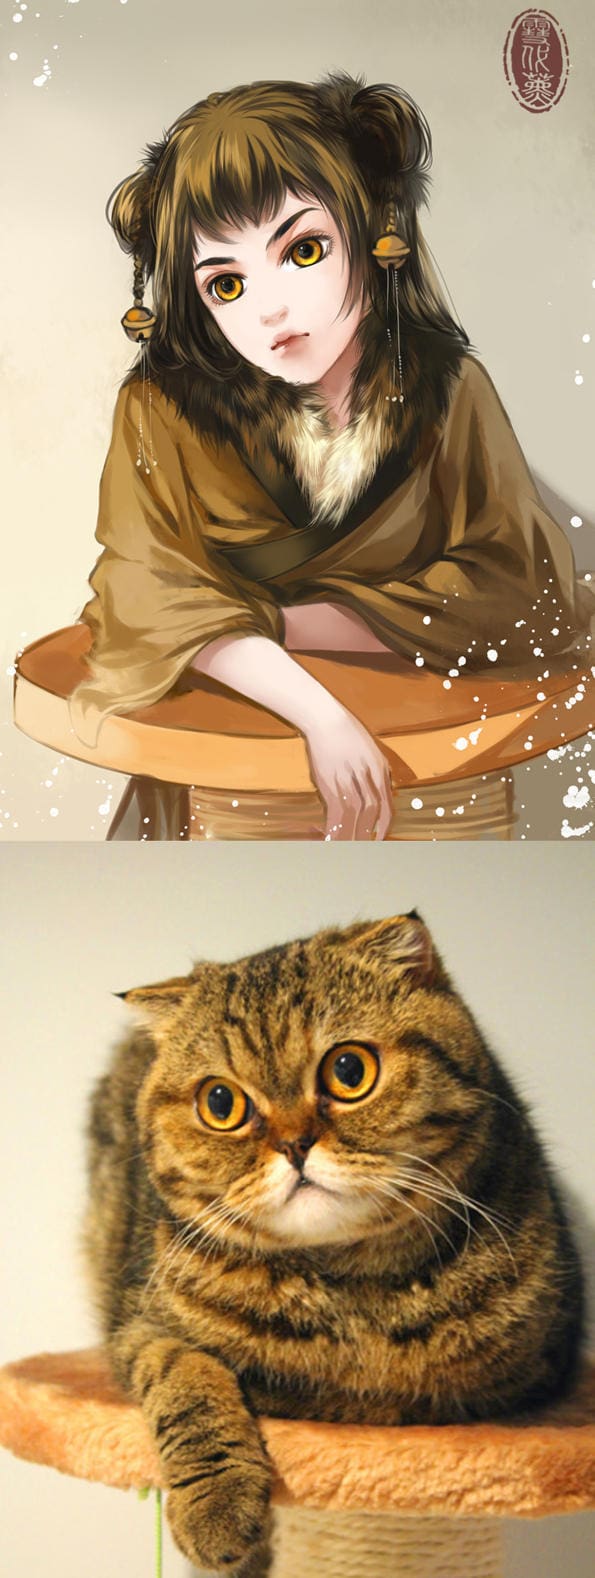 Cats transformed into human in beautiful art